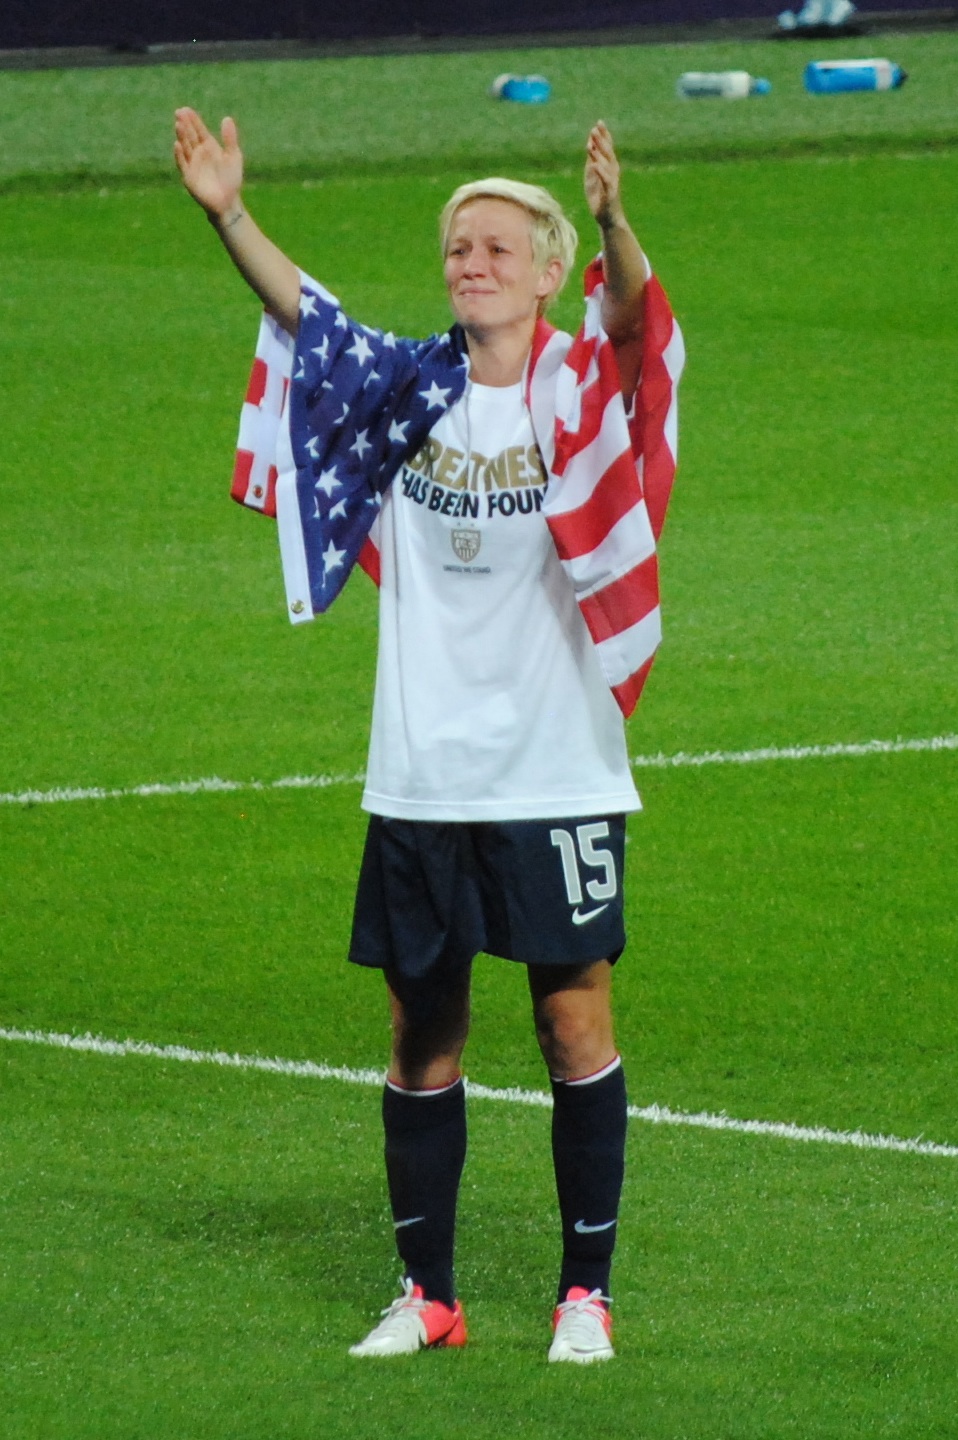 U.S. midfielder Megan Rapinoe celebrating her team's gold medal victory at the 2012 Summer Olympic Games in London. (Credit: Joel Solomon - mole555, flickr.com)